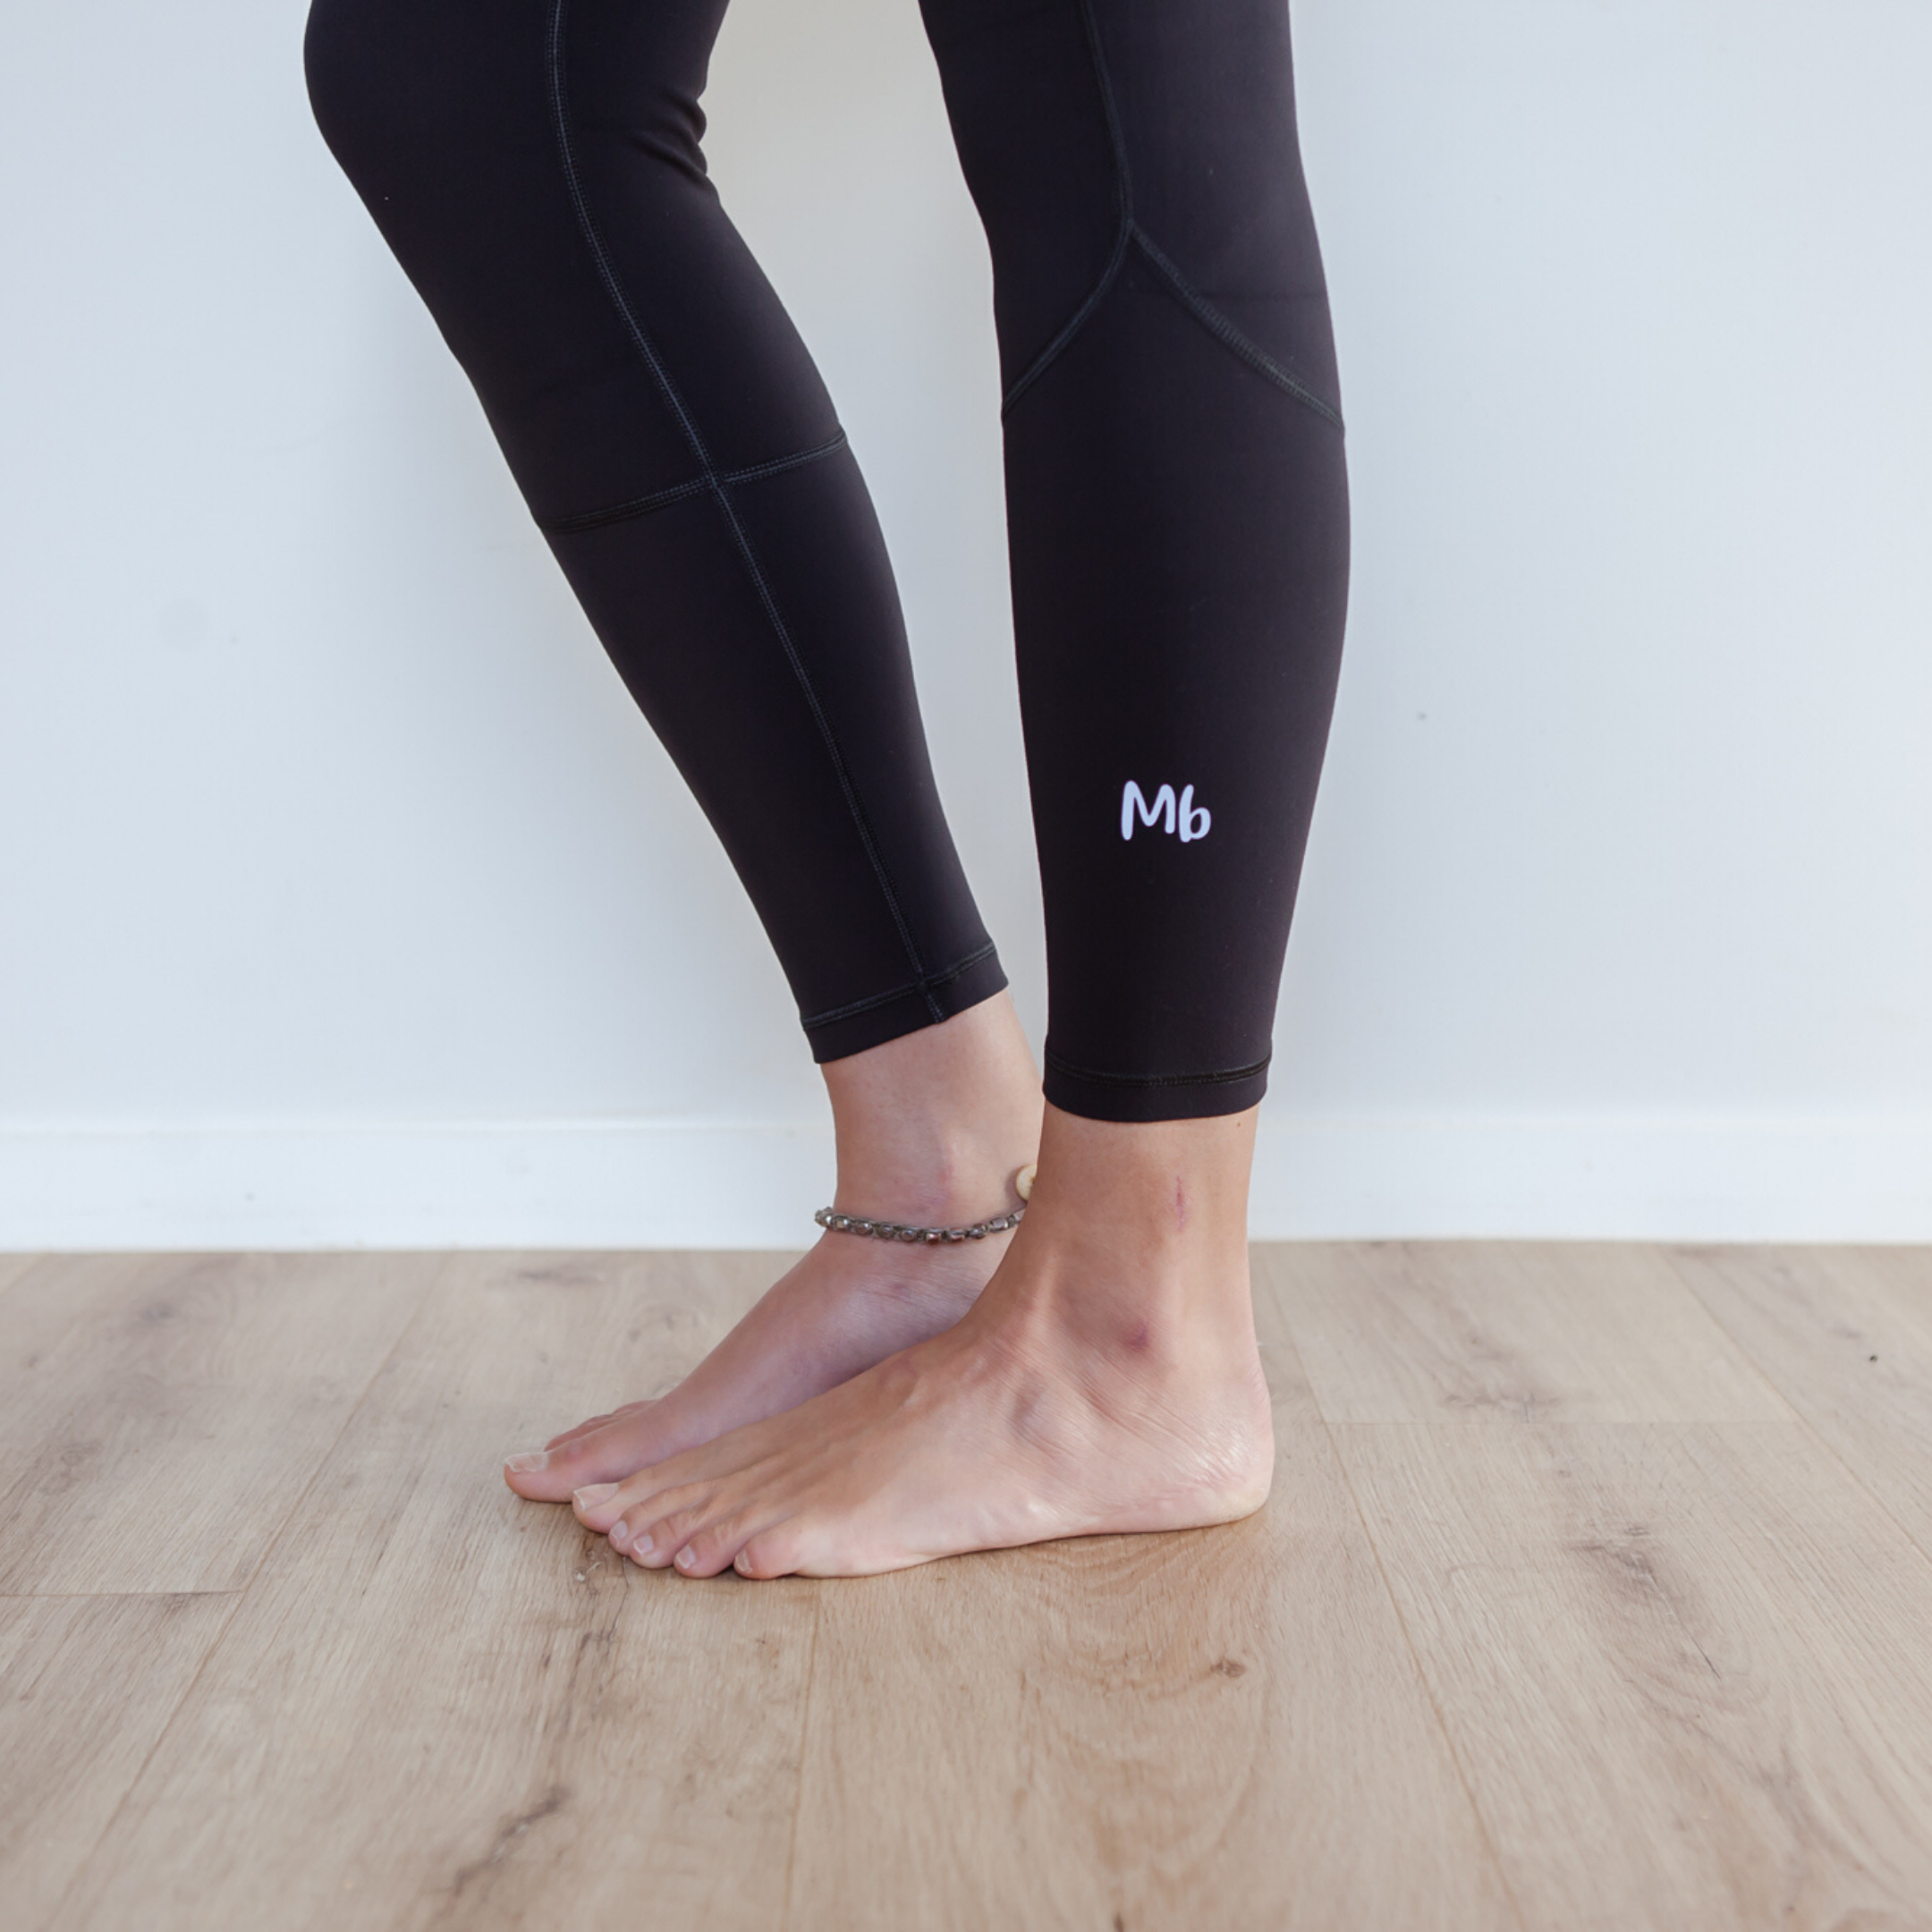  Black Legging Tights - , Brand: All in